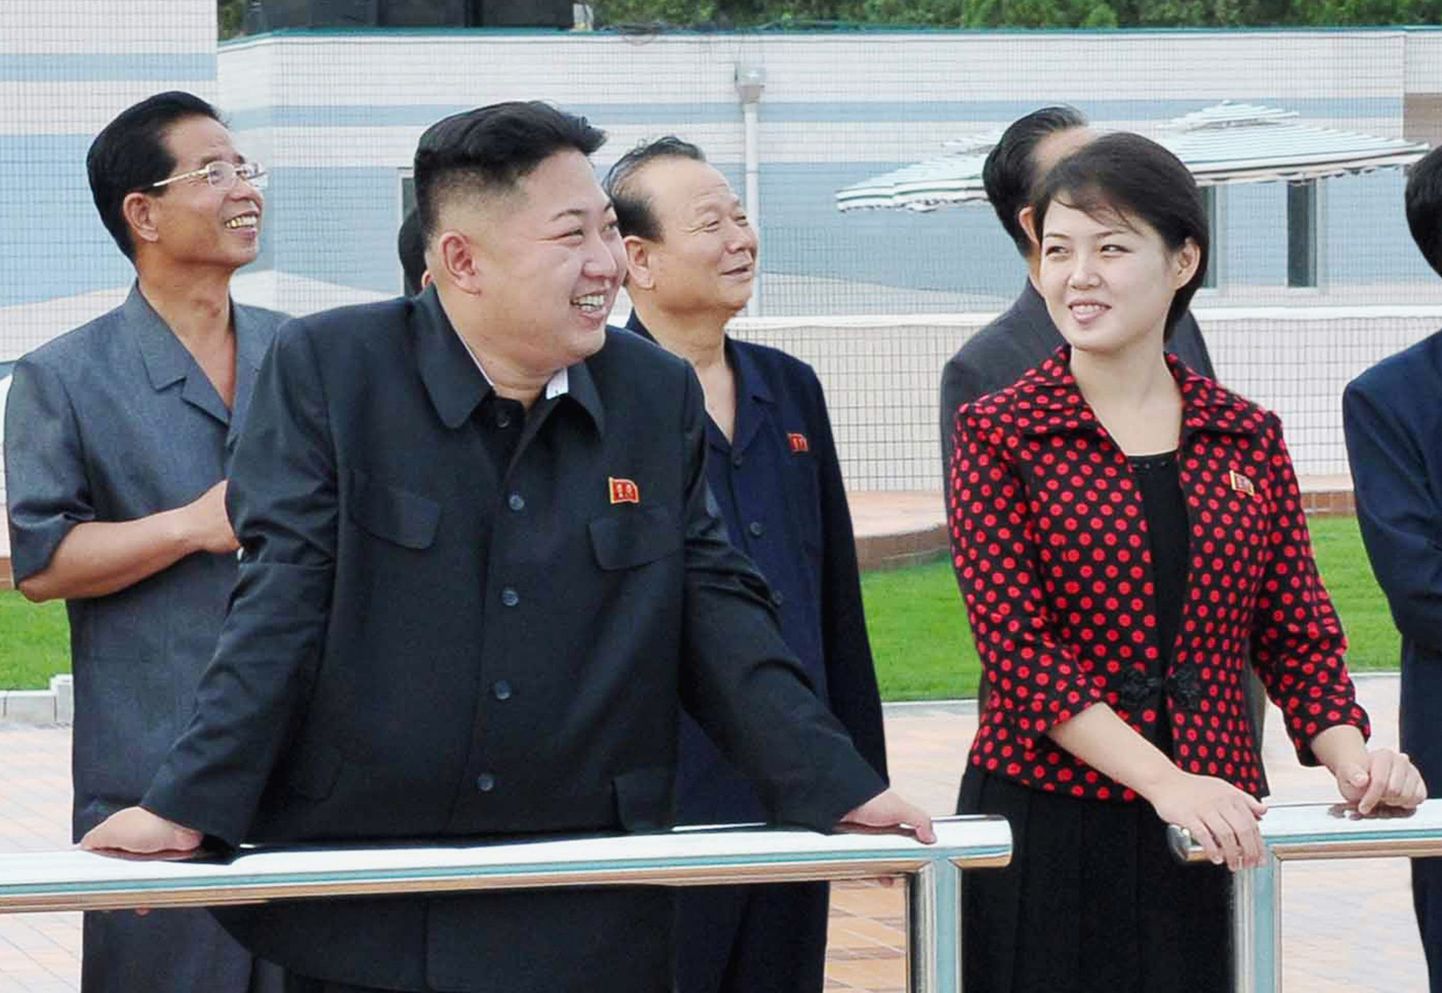 Põhja-Korea juht Kim Jong-un vasakul ning tema abikaasa Ri Sol-ju paremal.